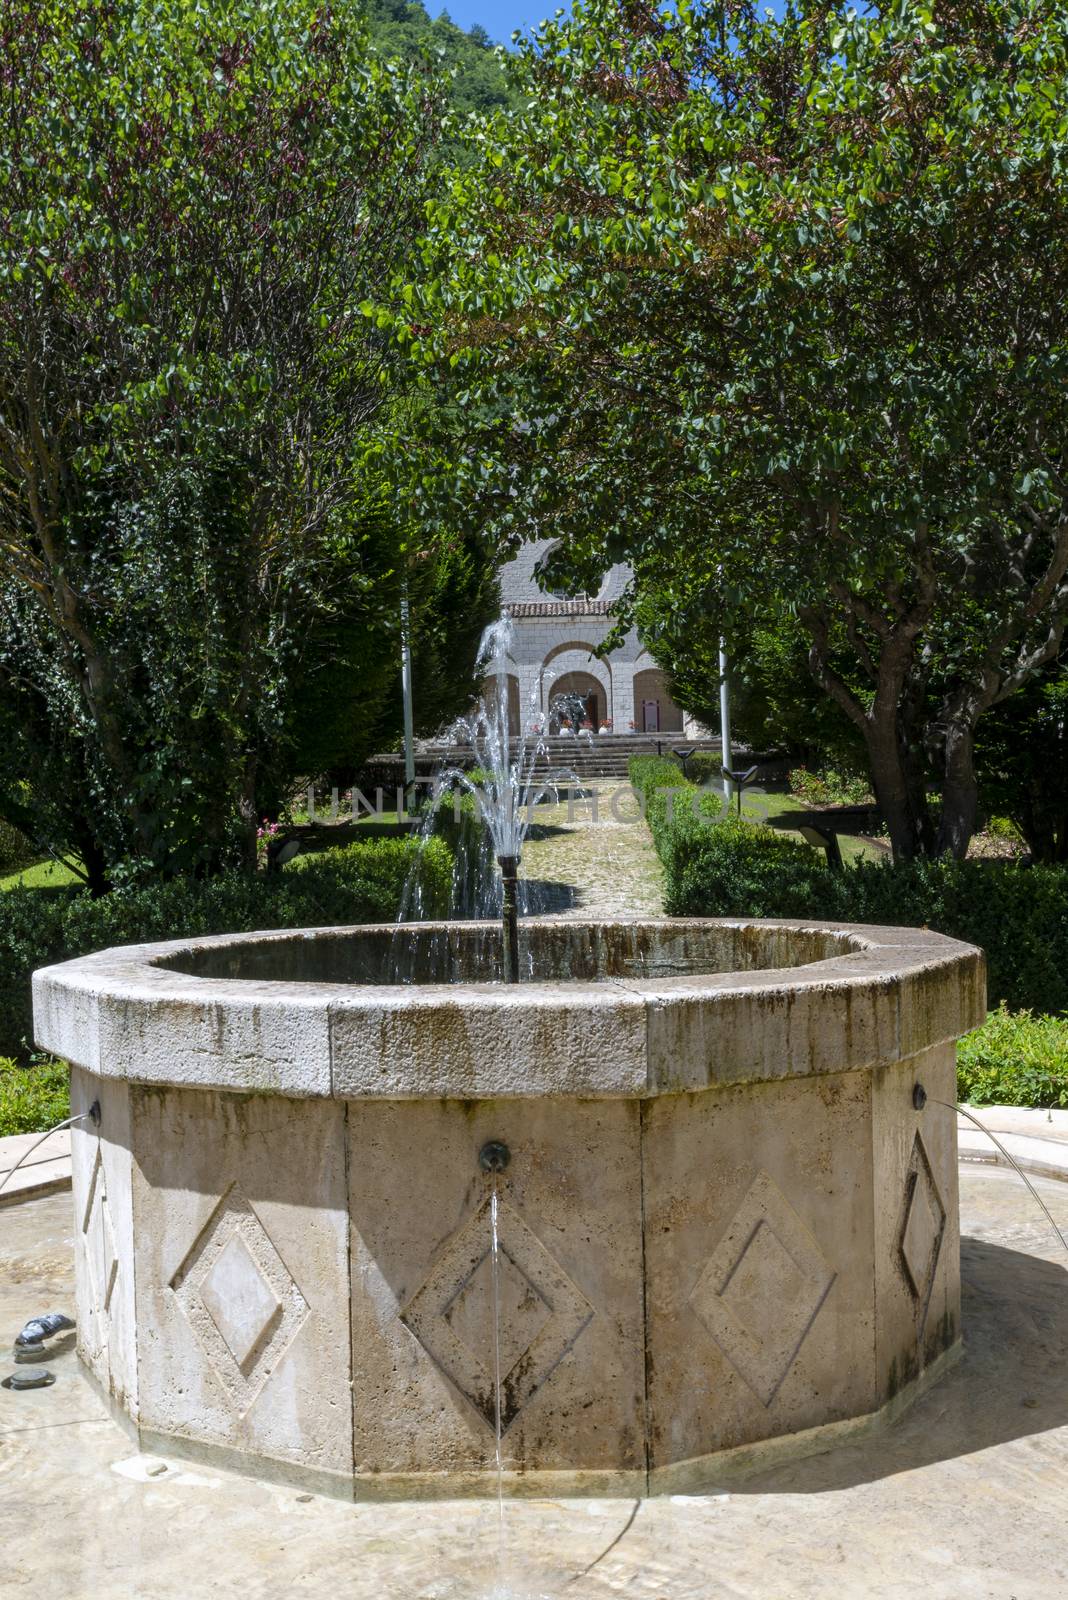 rocca porena,italy july 05 2020:fountain in the garden of the sanctuary of rocca porena